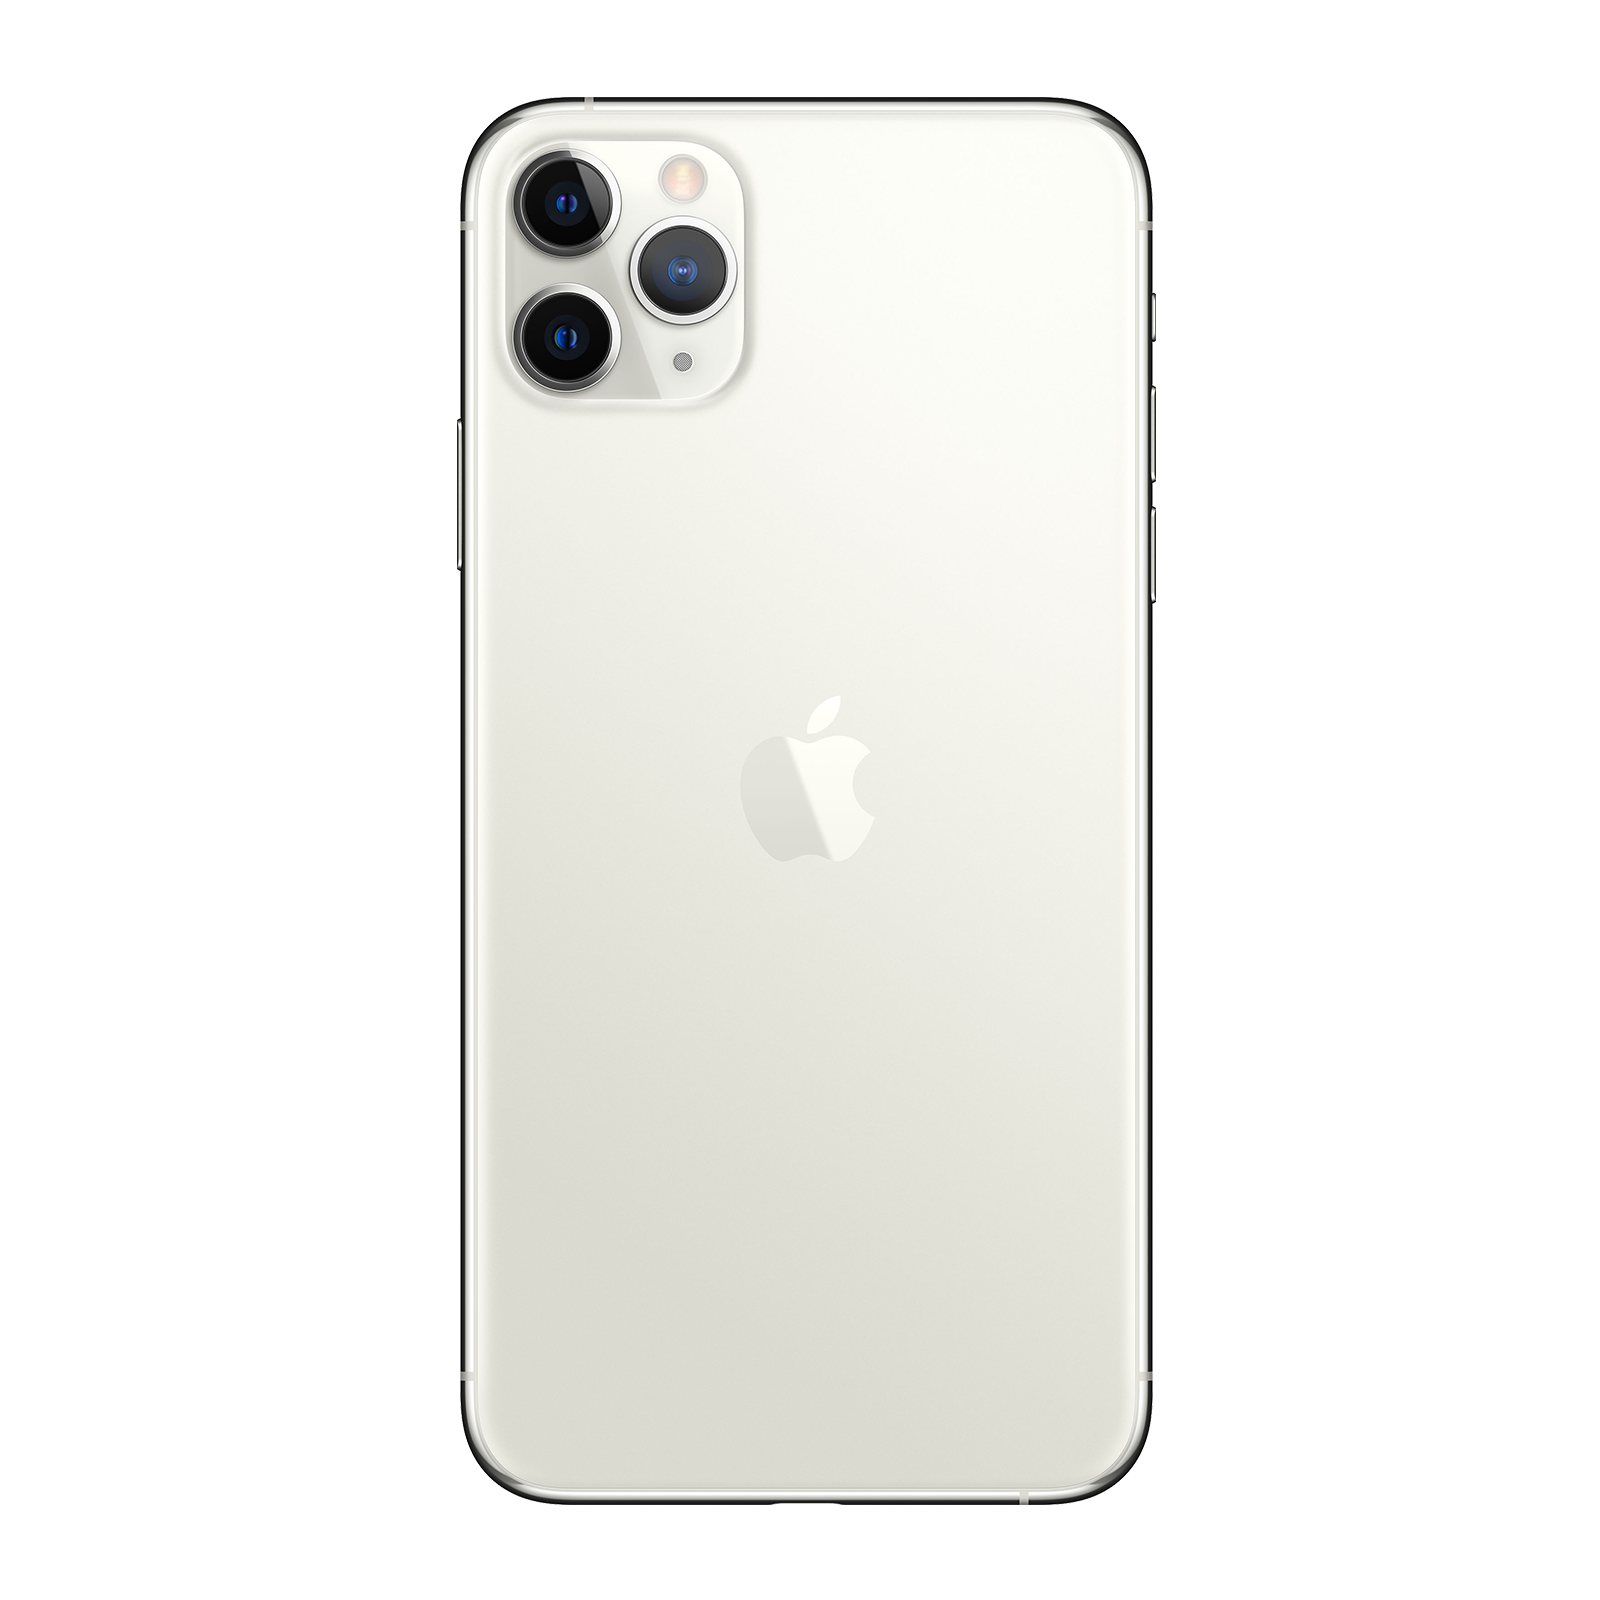 Apple iPhone 11 Pro 256GB Silver Fair - T-Mobile